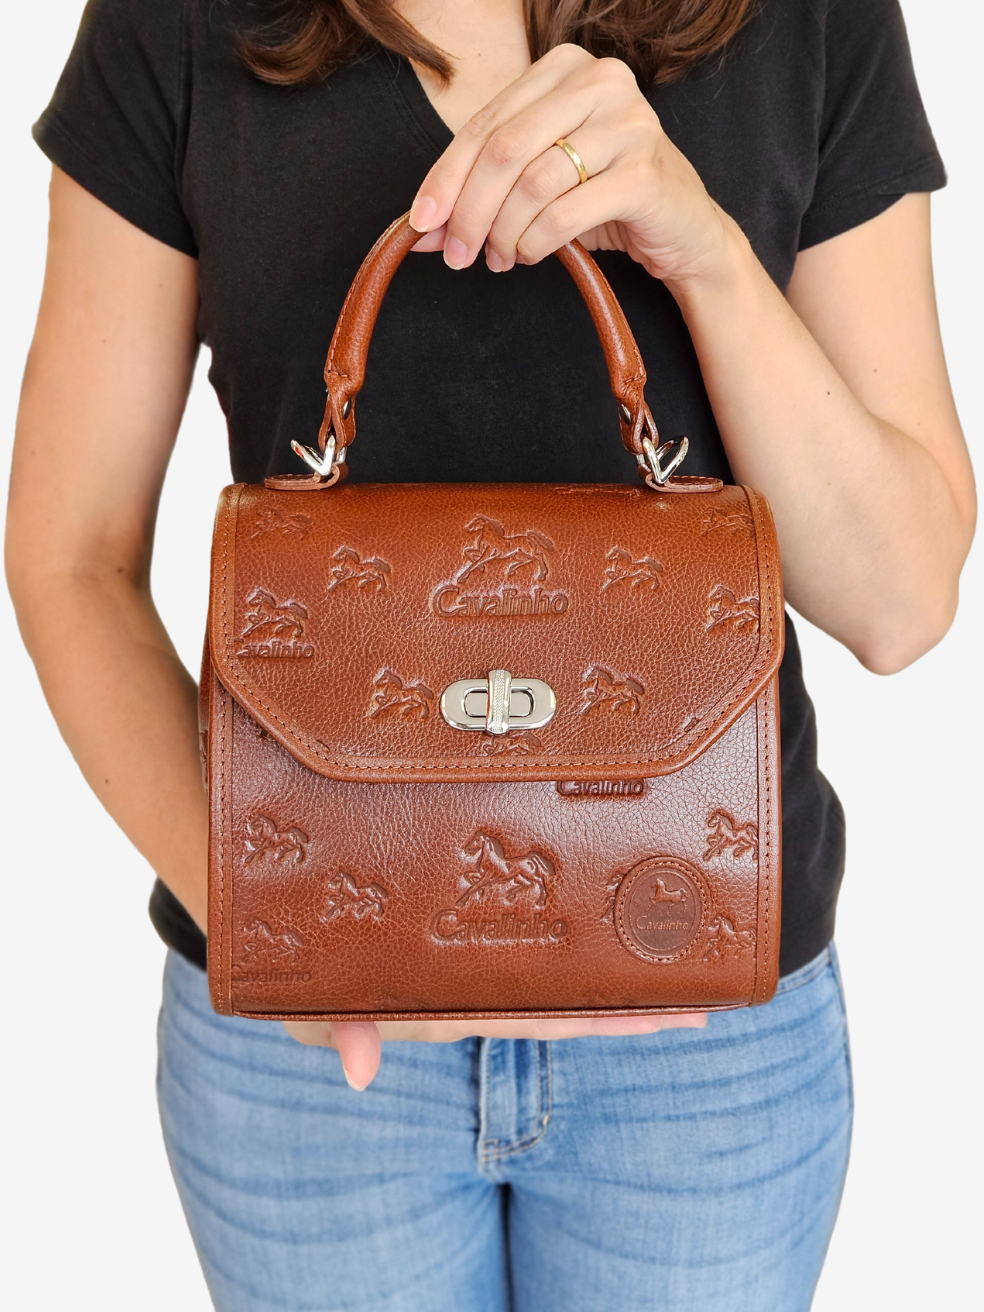 Cavalinho Cavalo Lusitano Leather Handbag SKU 18090518.13 #color_saddlebrown